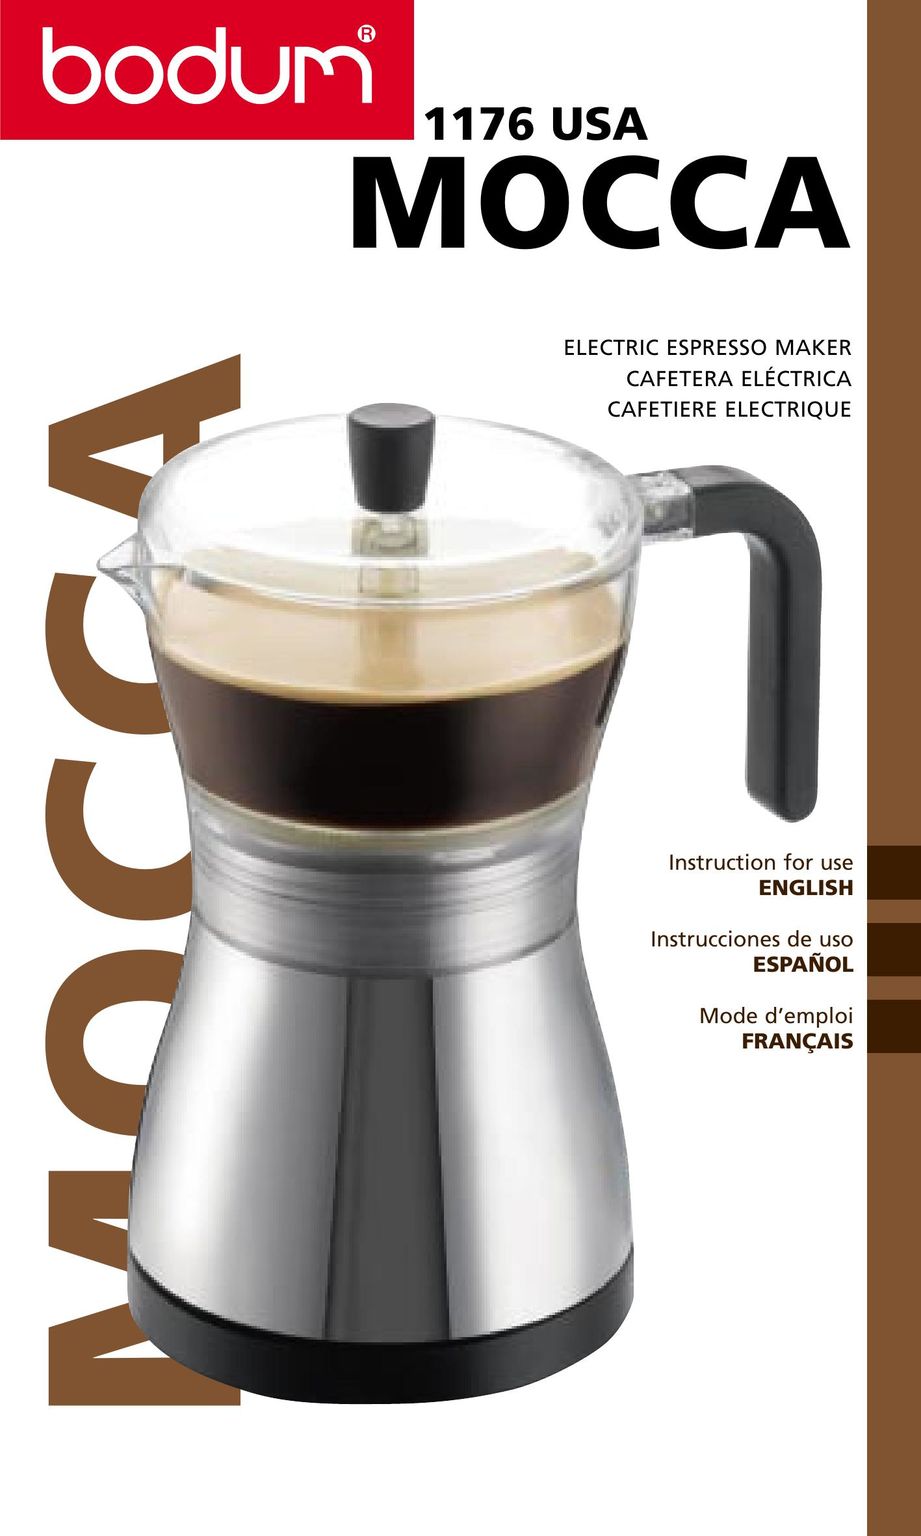 Bodum MOCCA 1176 USA Coffeemaker User Manual